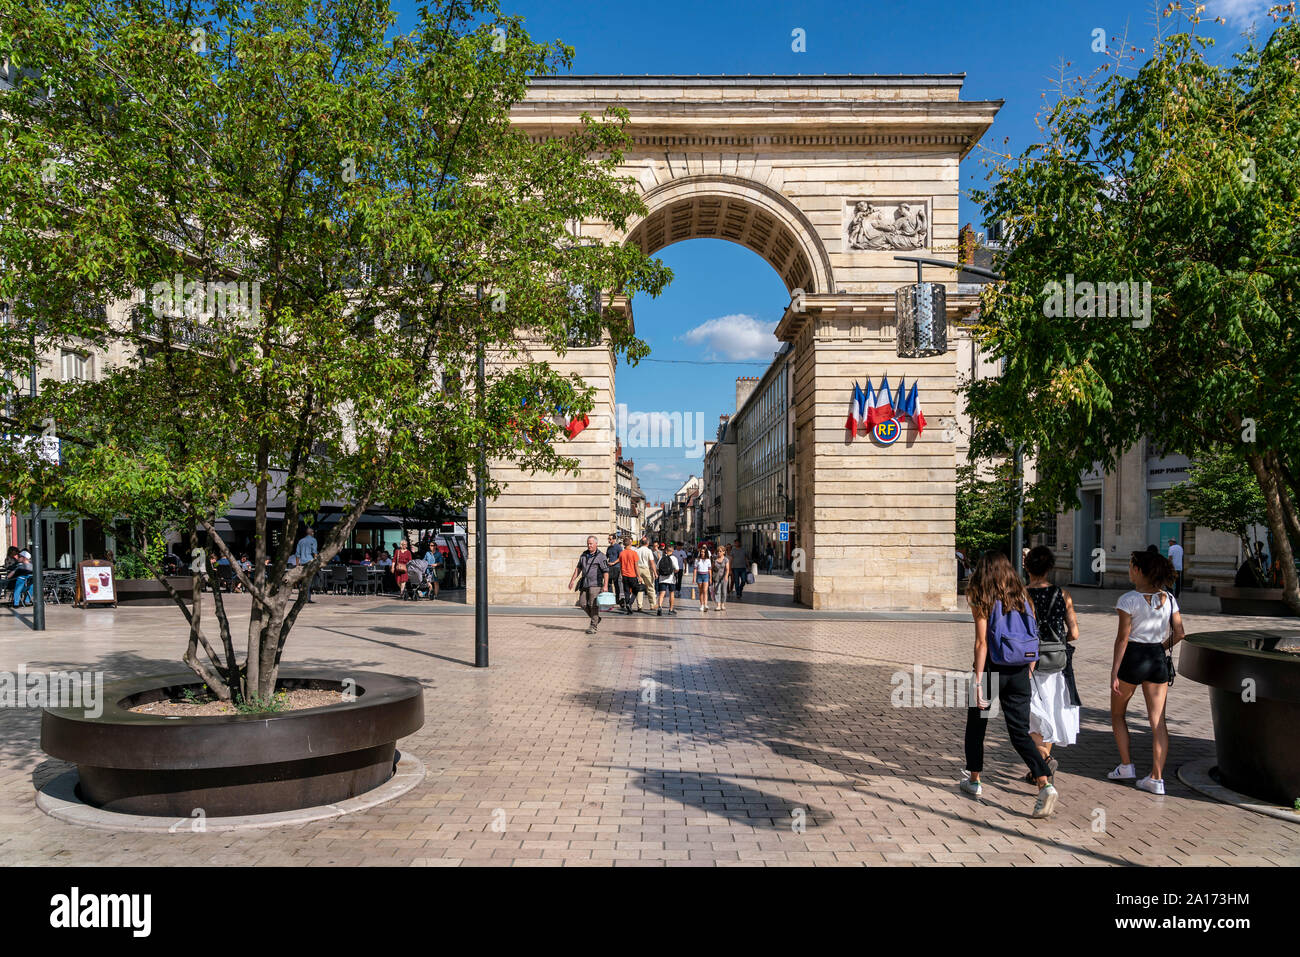 Darcy square and the arch of Port GuillaumeP Rue de la Liberte, Dijon, Burgundy, France, Stock Photo